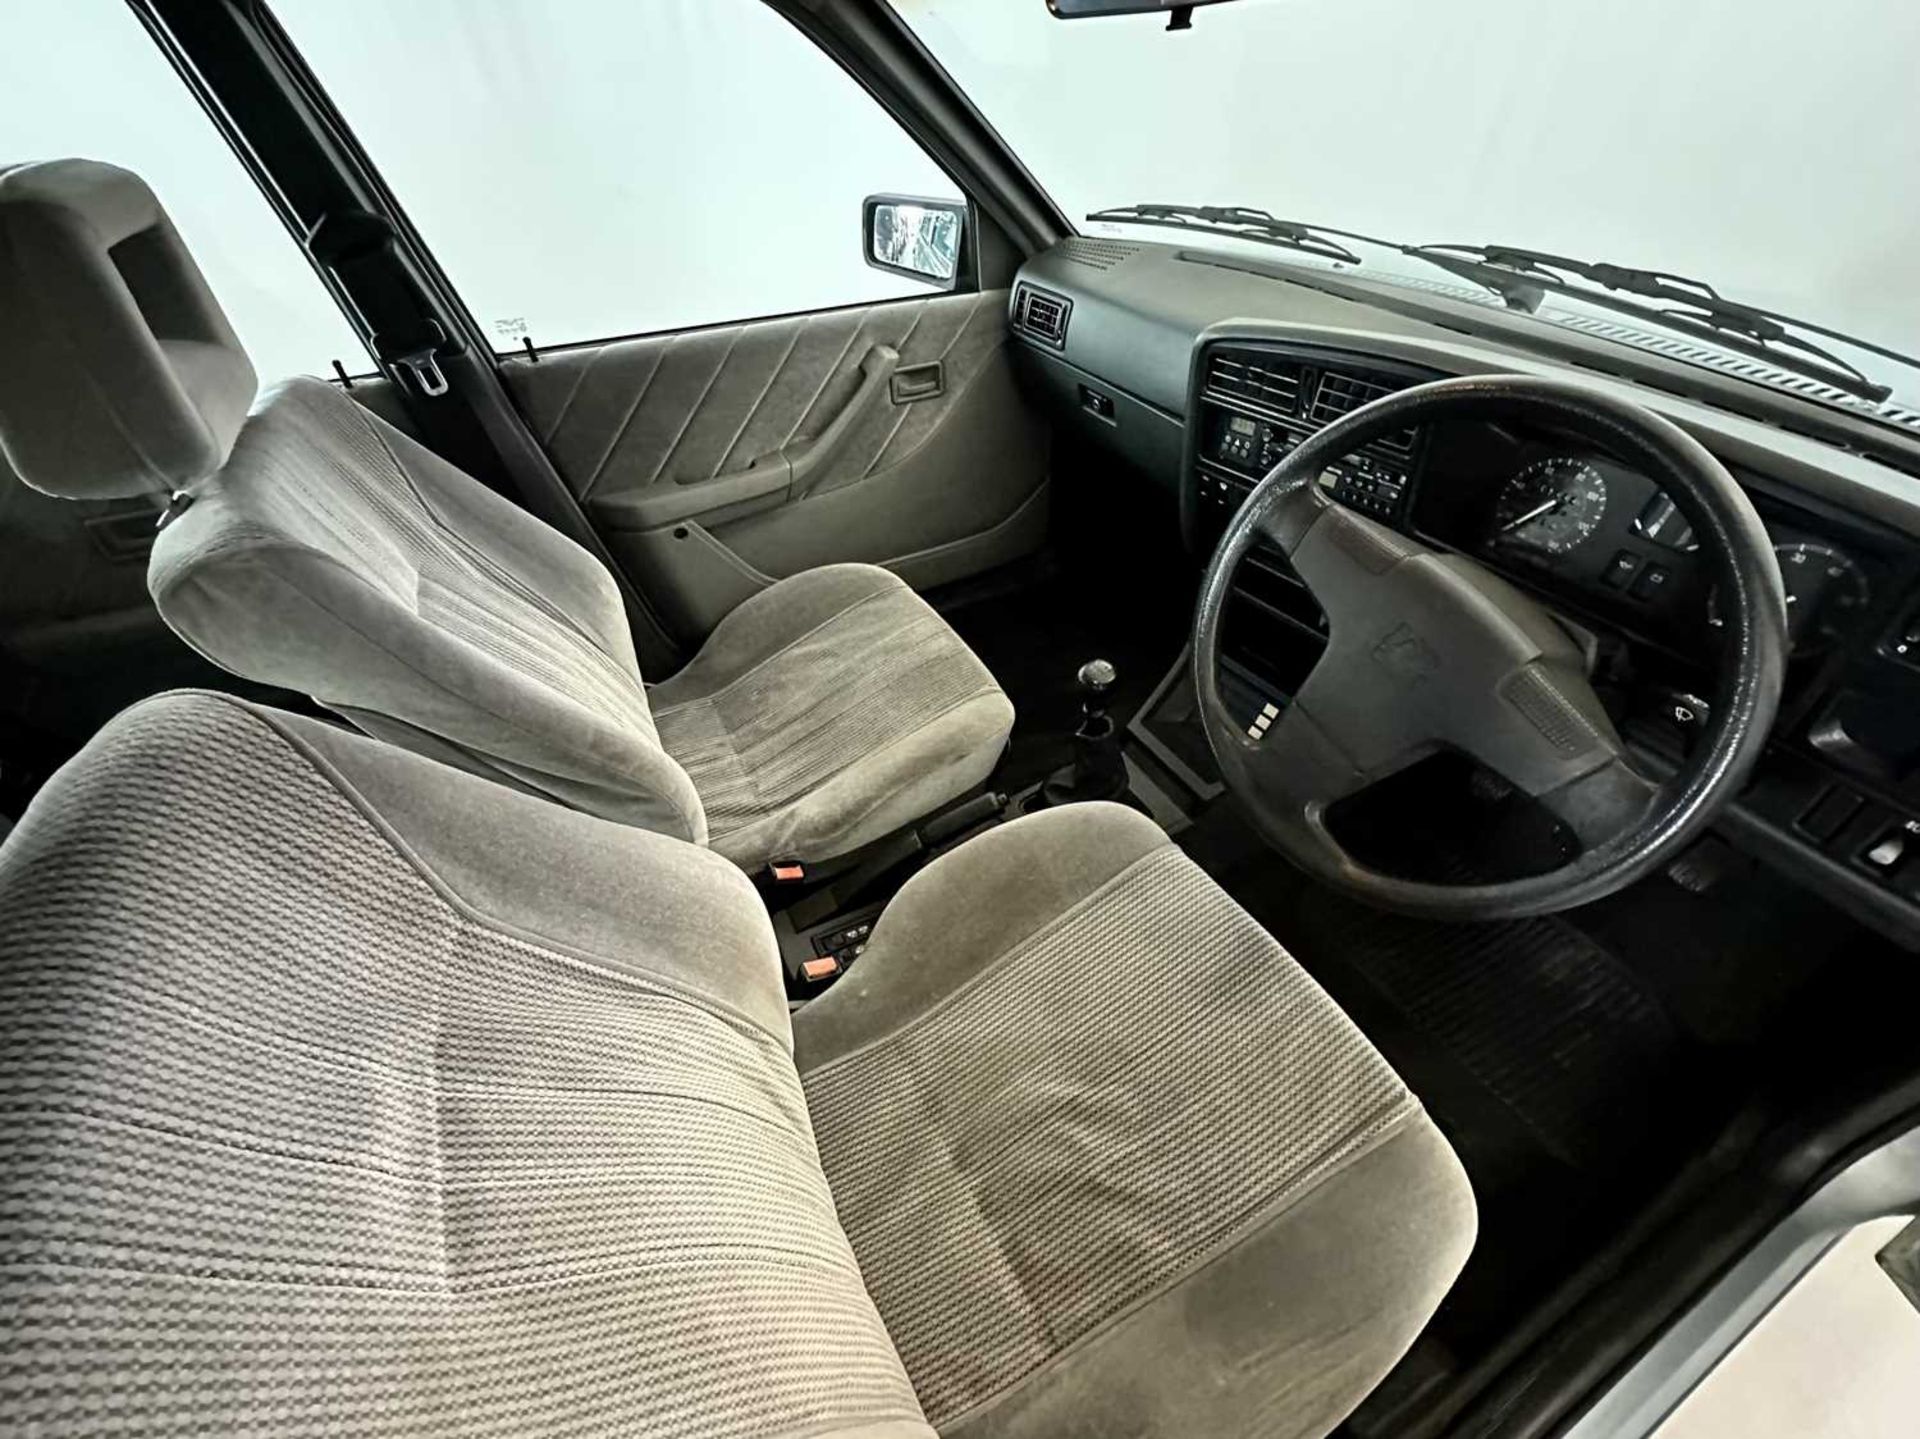 1988 Vauxhall Cavalier - Image 19 of 34